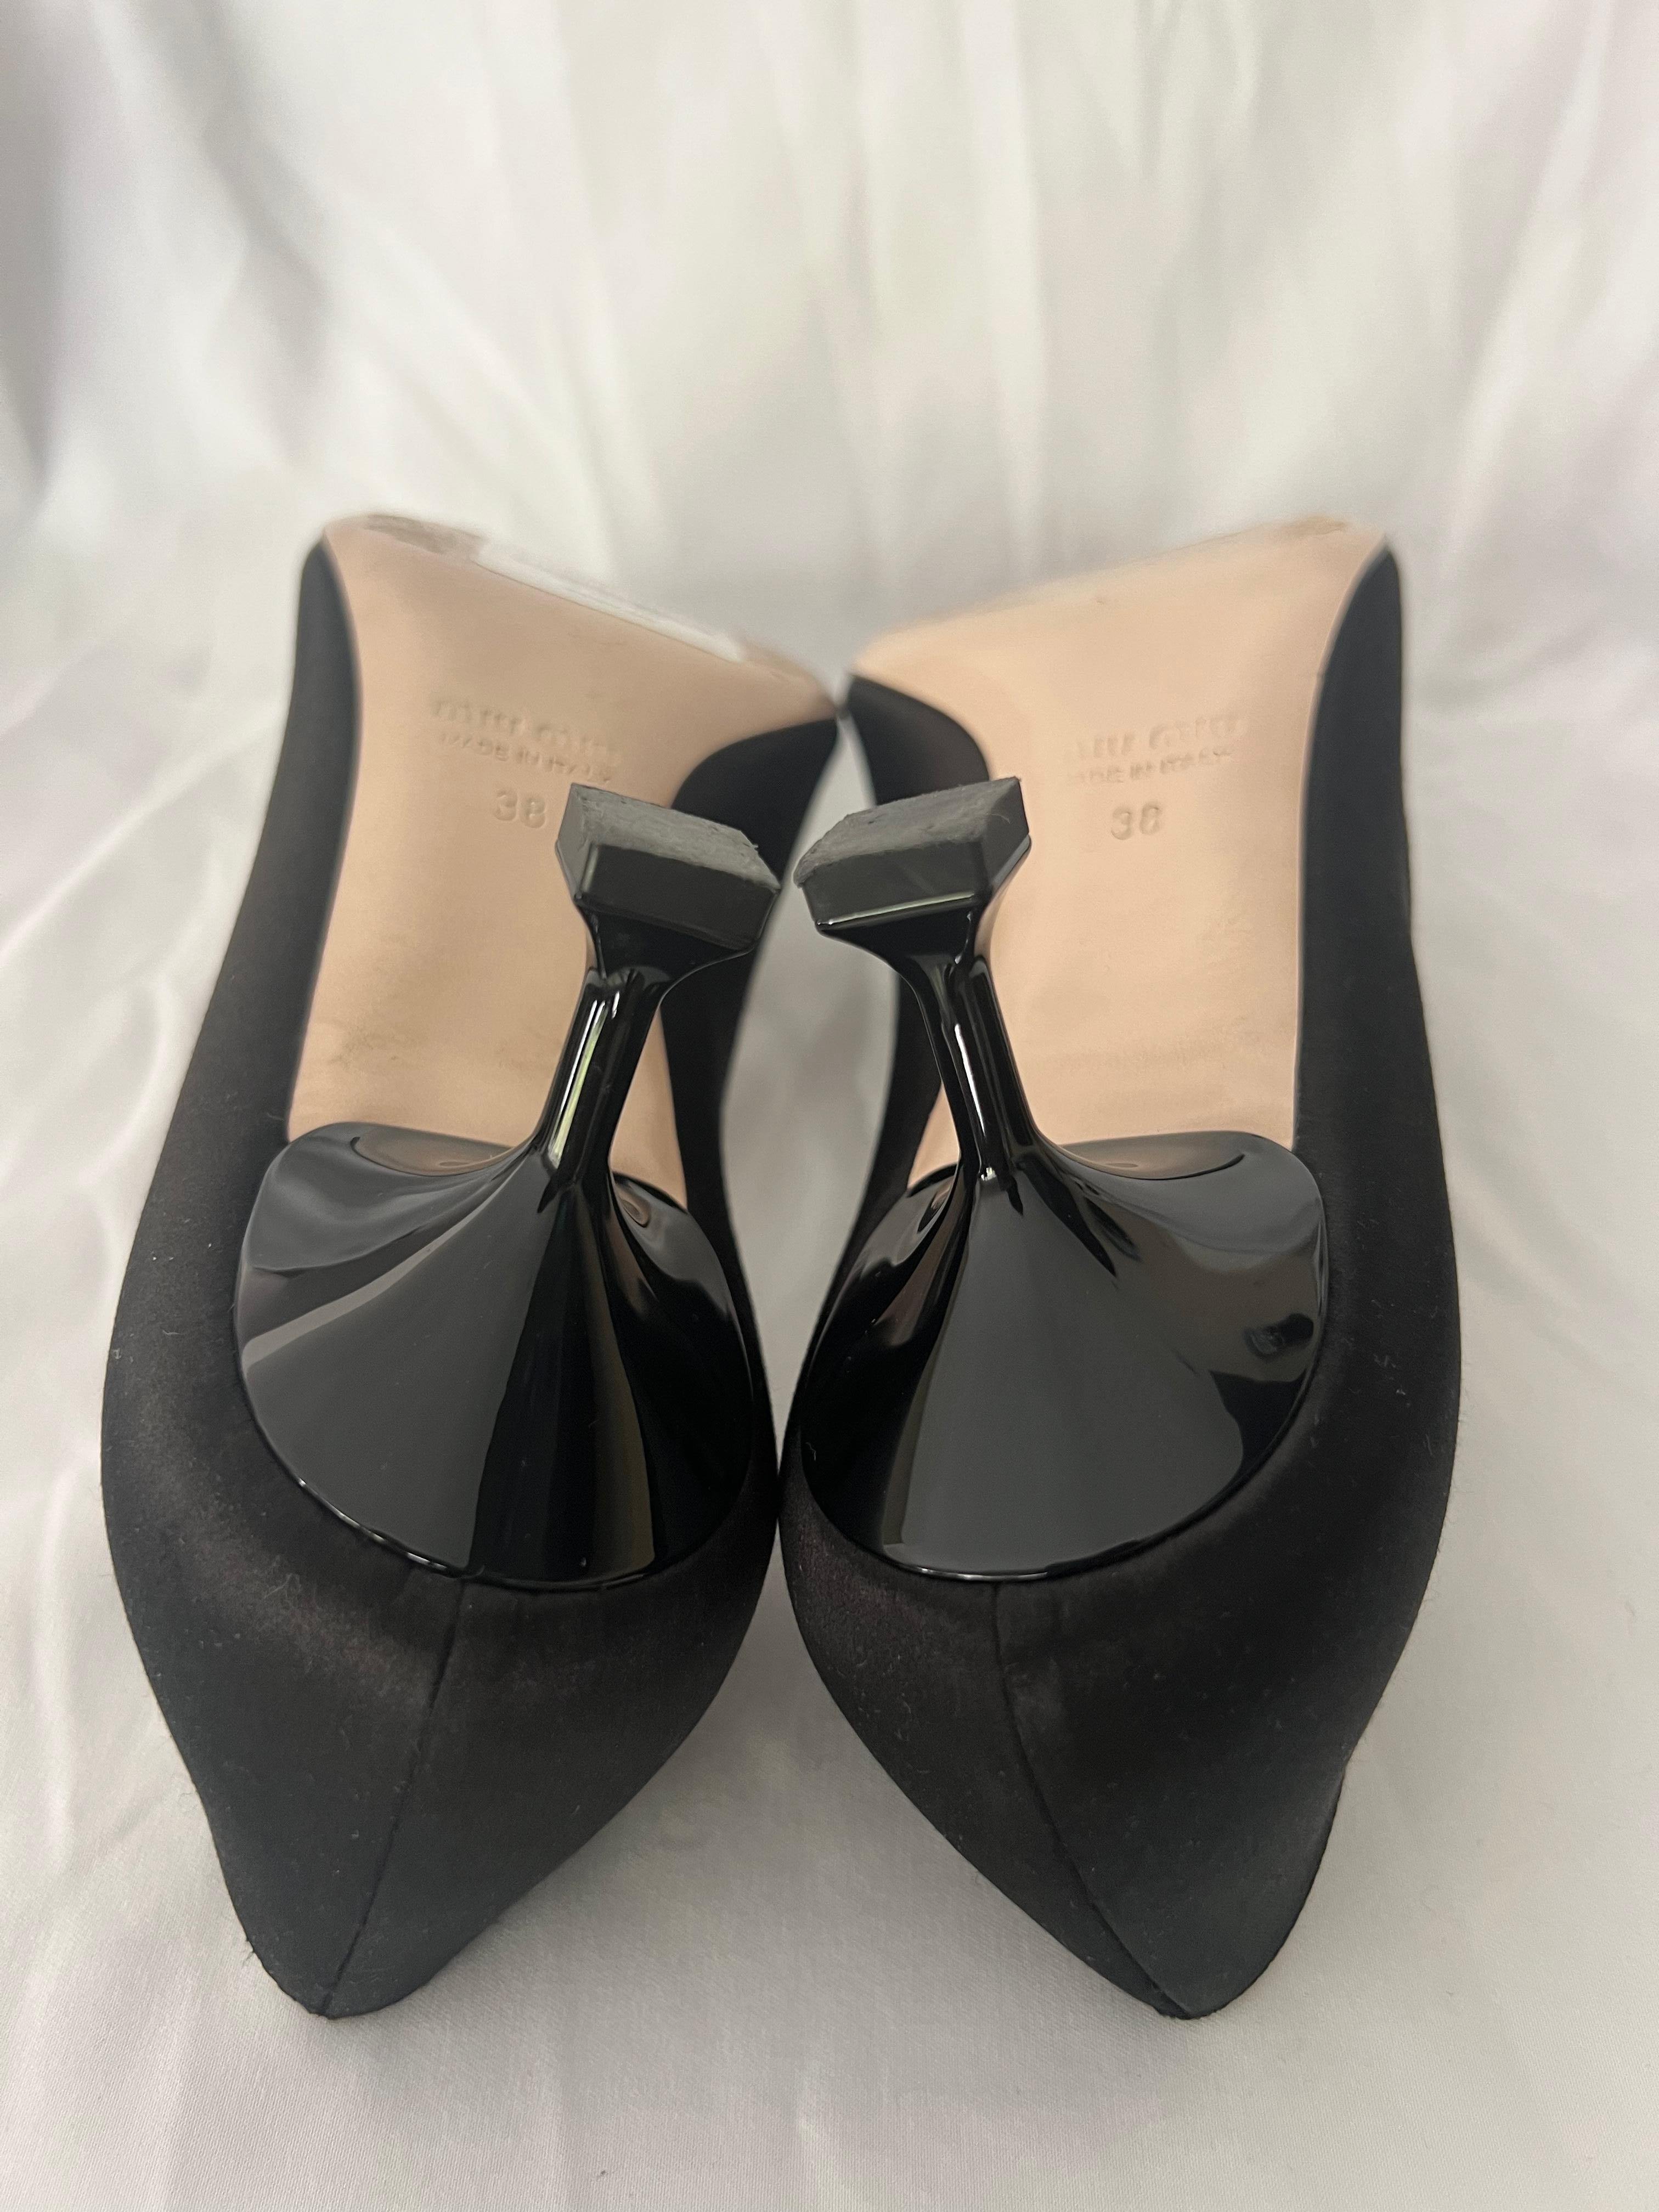 Miu Miu Black Satin & Crystal Pump Heels, Size 38 1